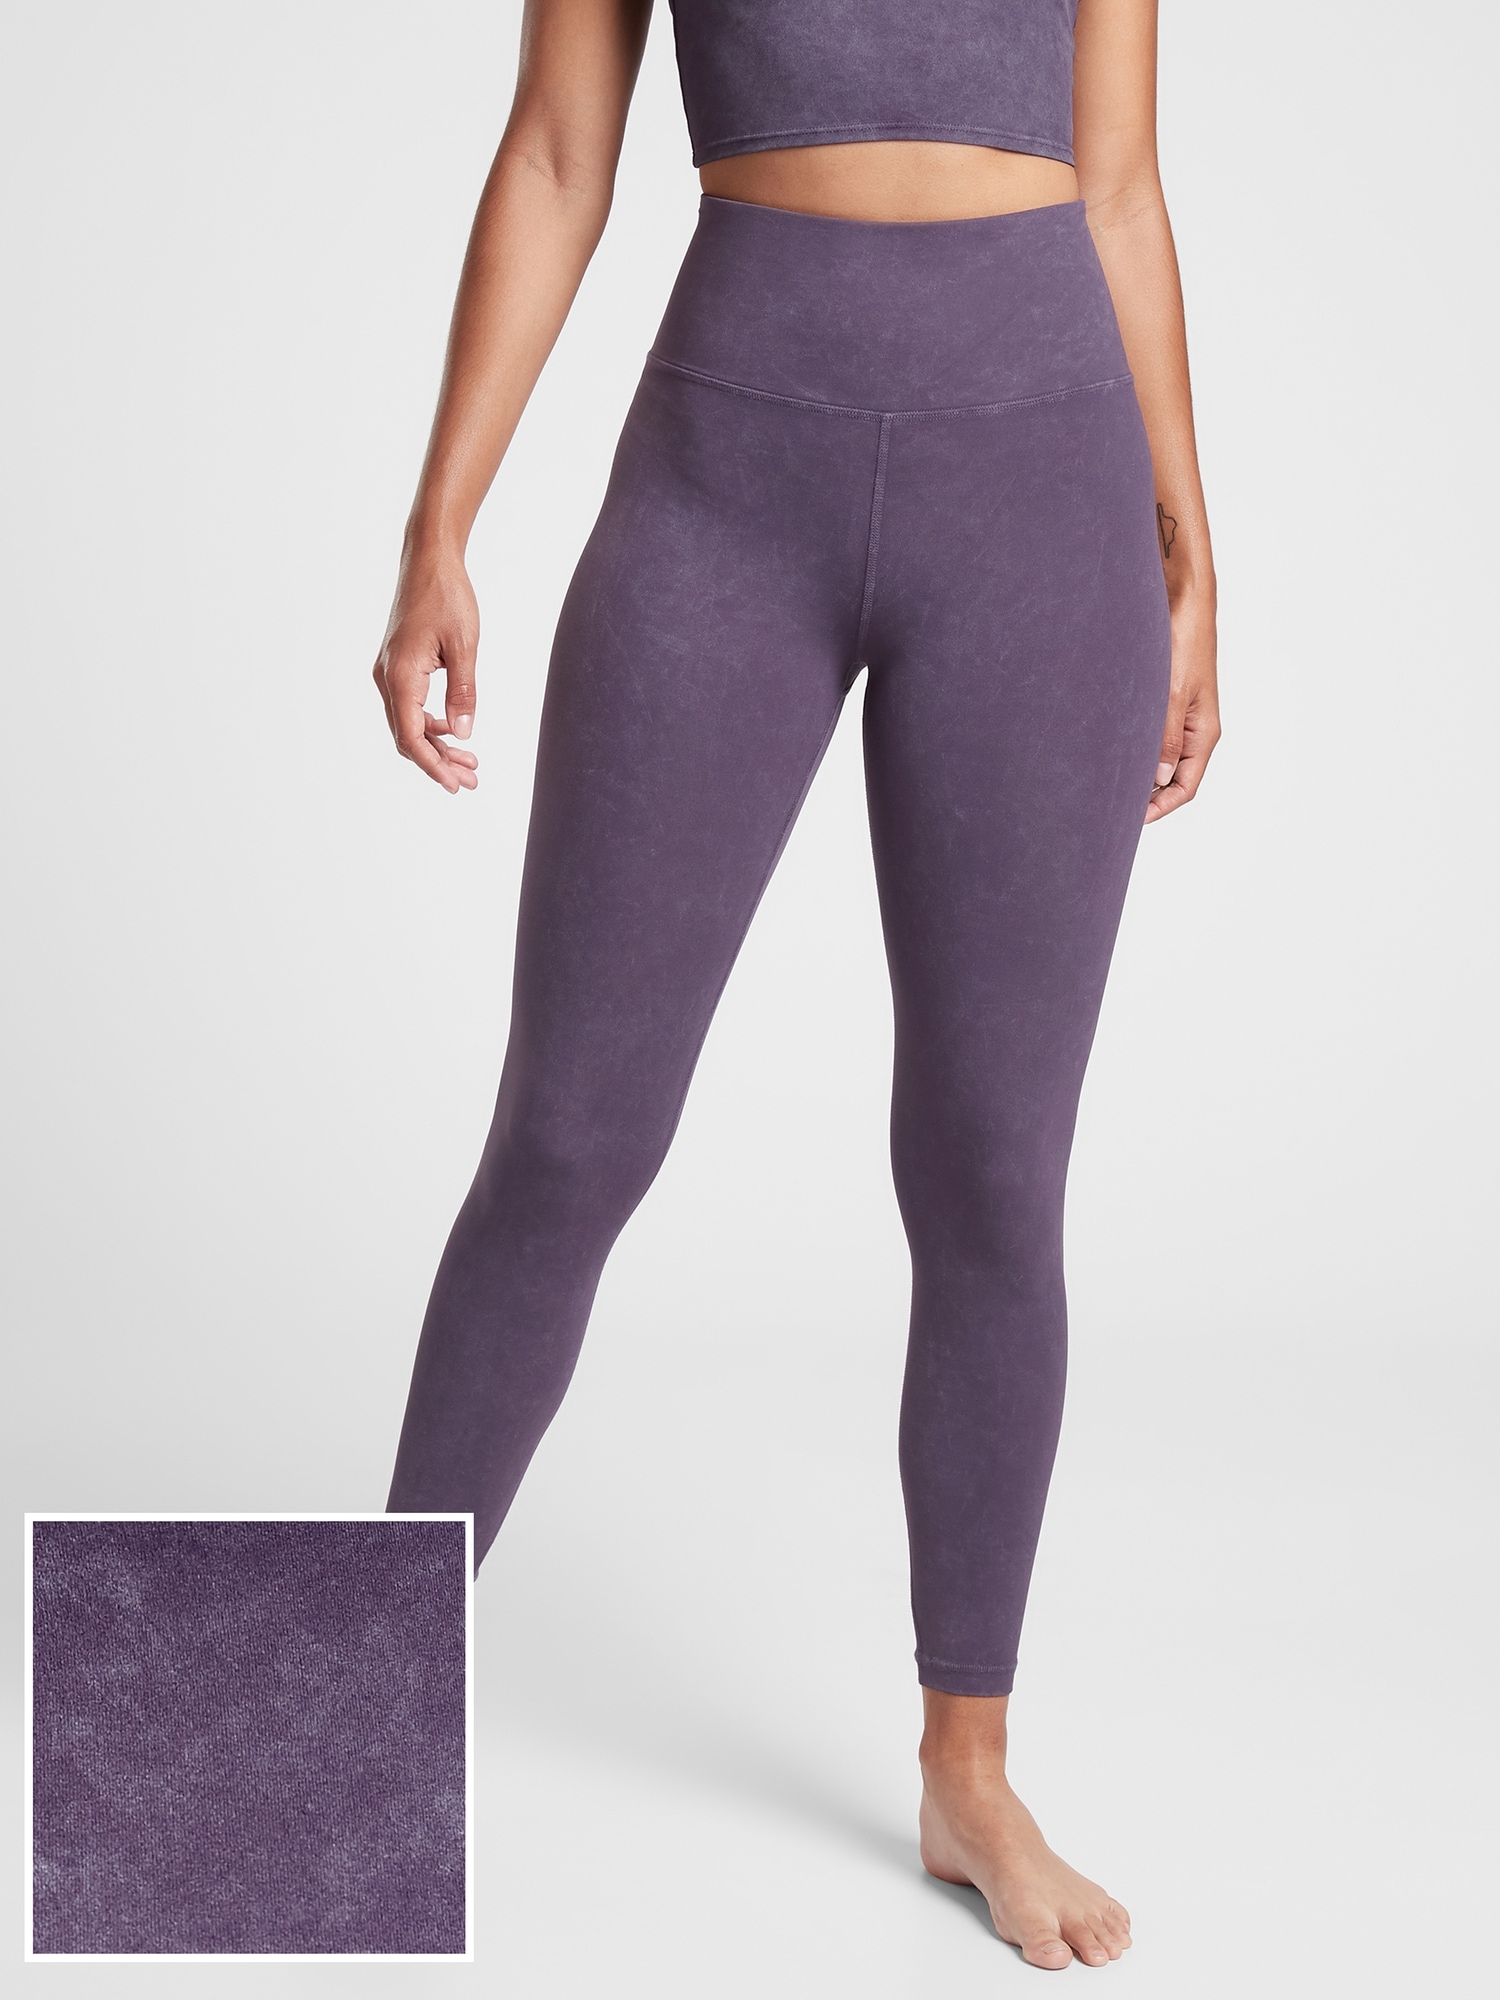 ATHLETA Purple A-C Garment Dyed Conscious Crop Yoga Tank Top #599206 NWT!  XL